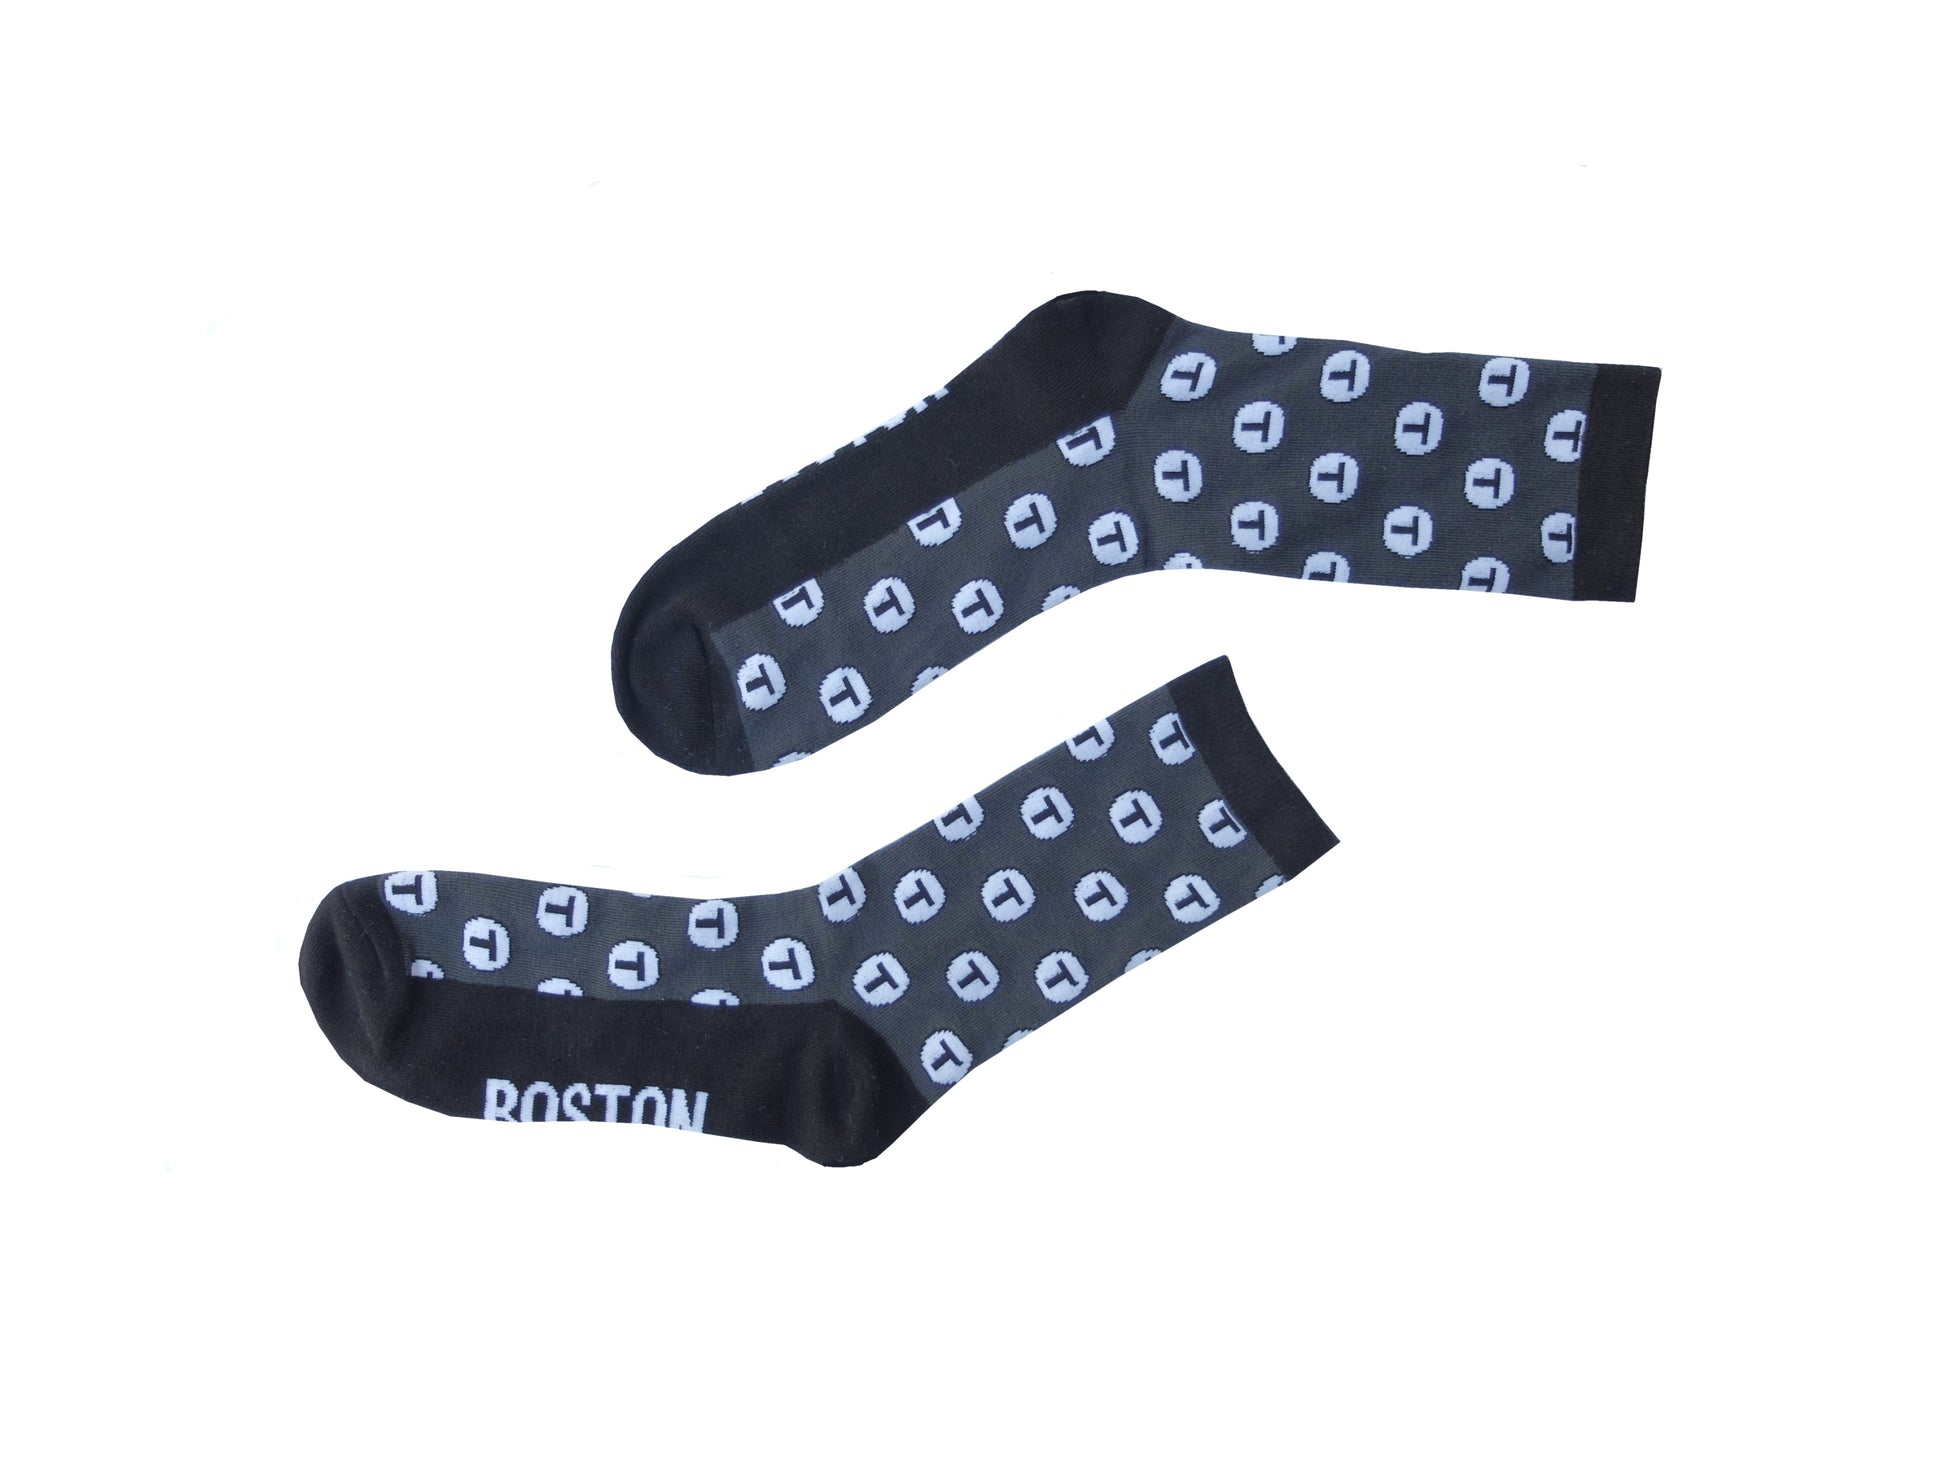 Adult Black & Charcoal Socks with White & Black MBTA "T" Logos